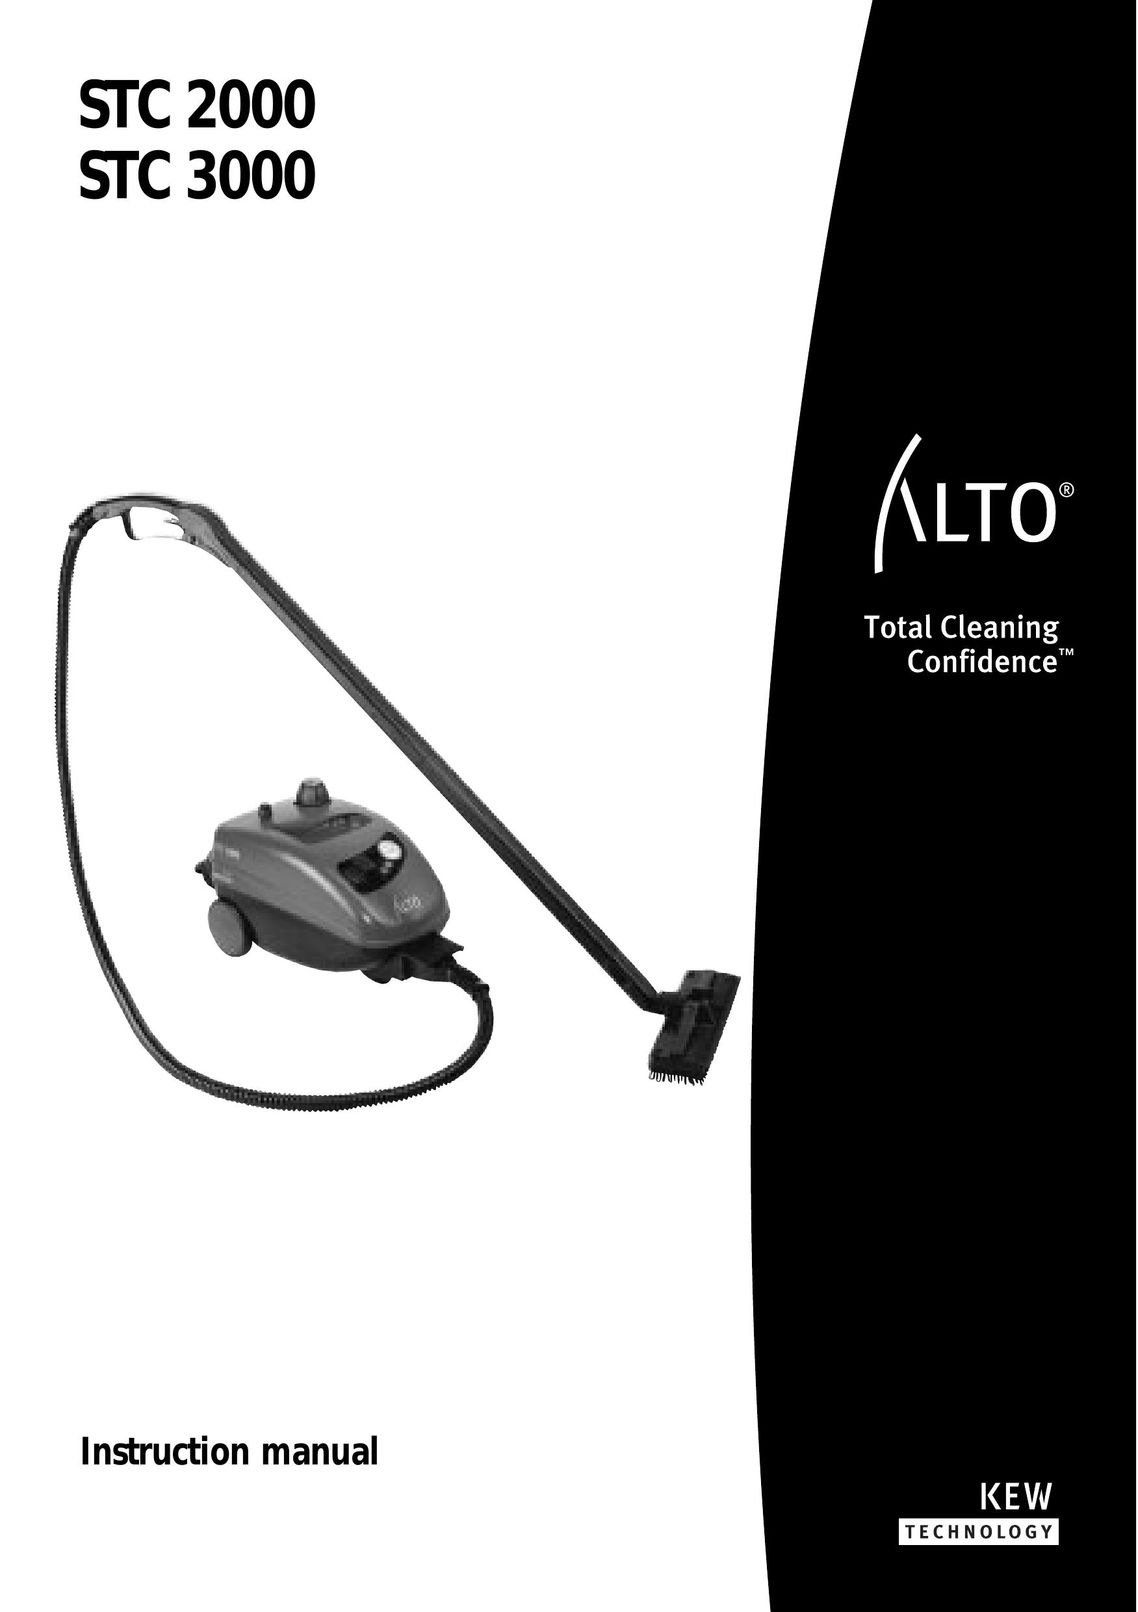 Alto-Shaam STC 2000 Carpet Cleaner User Manual